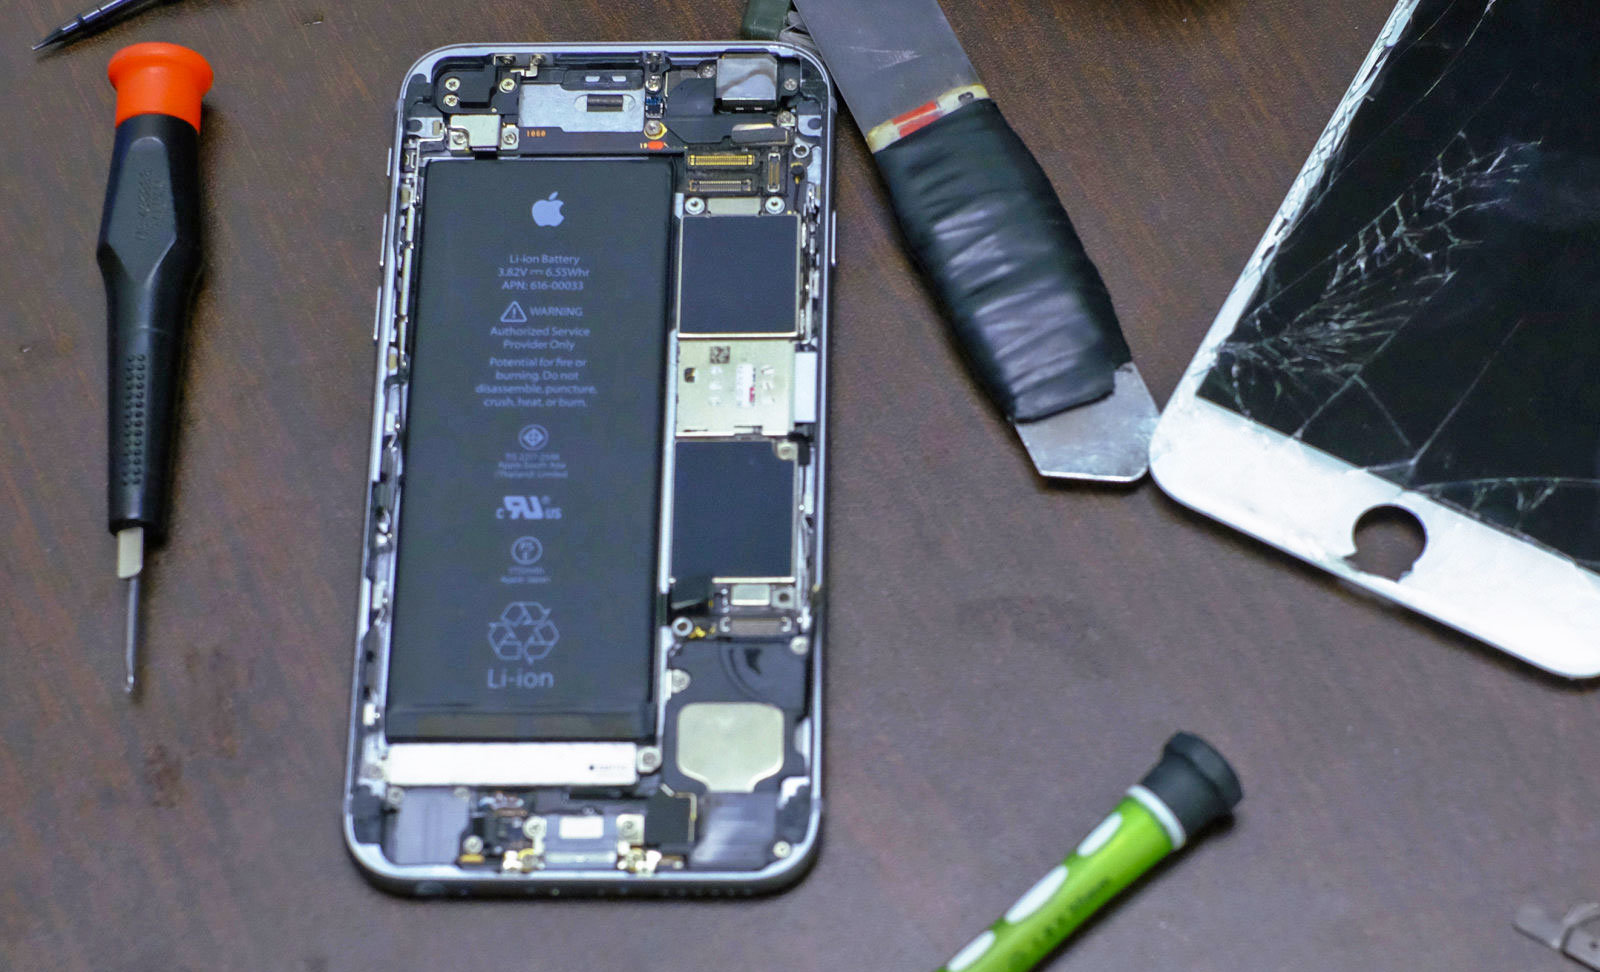 Apple iPhone service center HSR Layout | iPhone repair